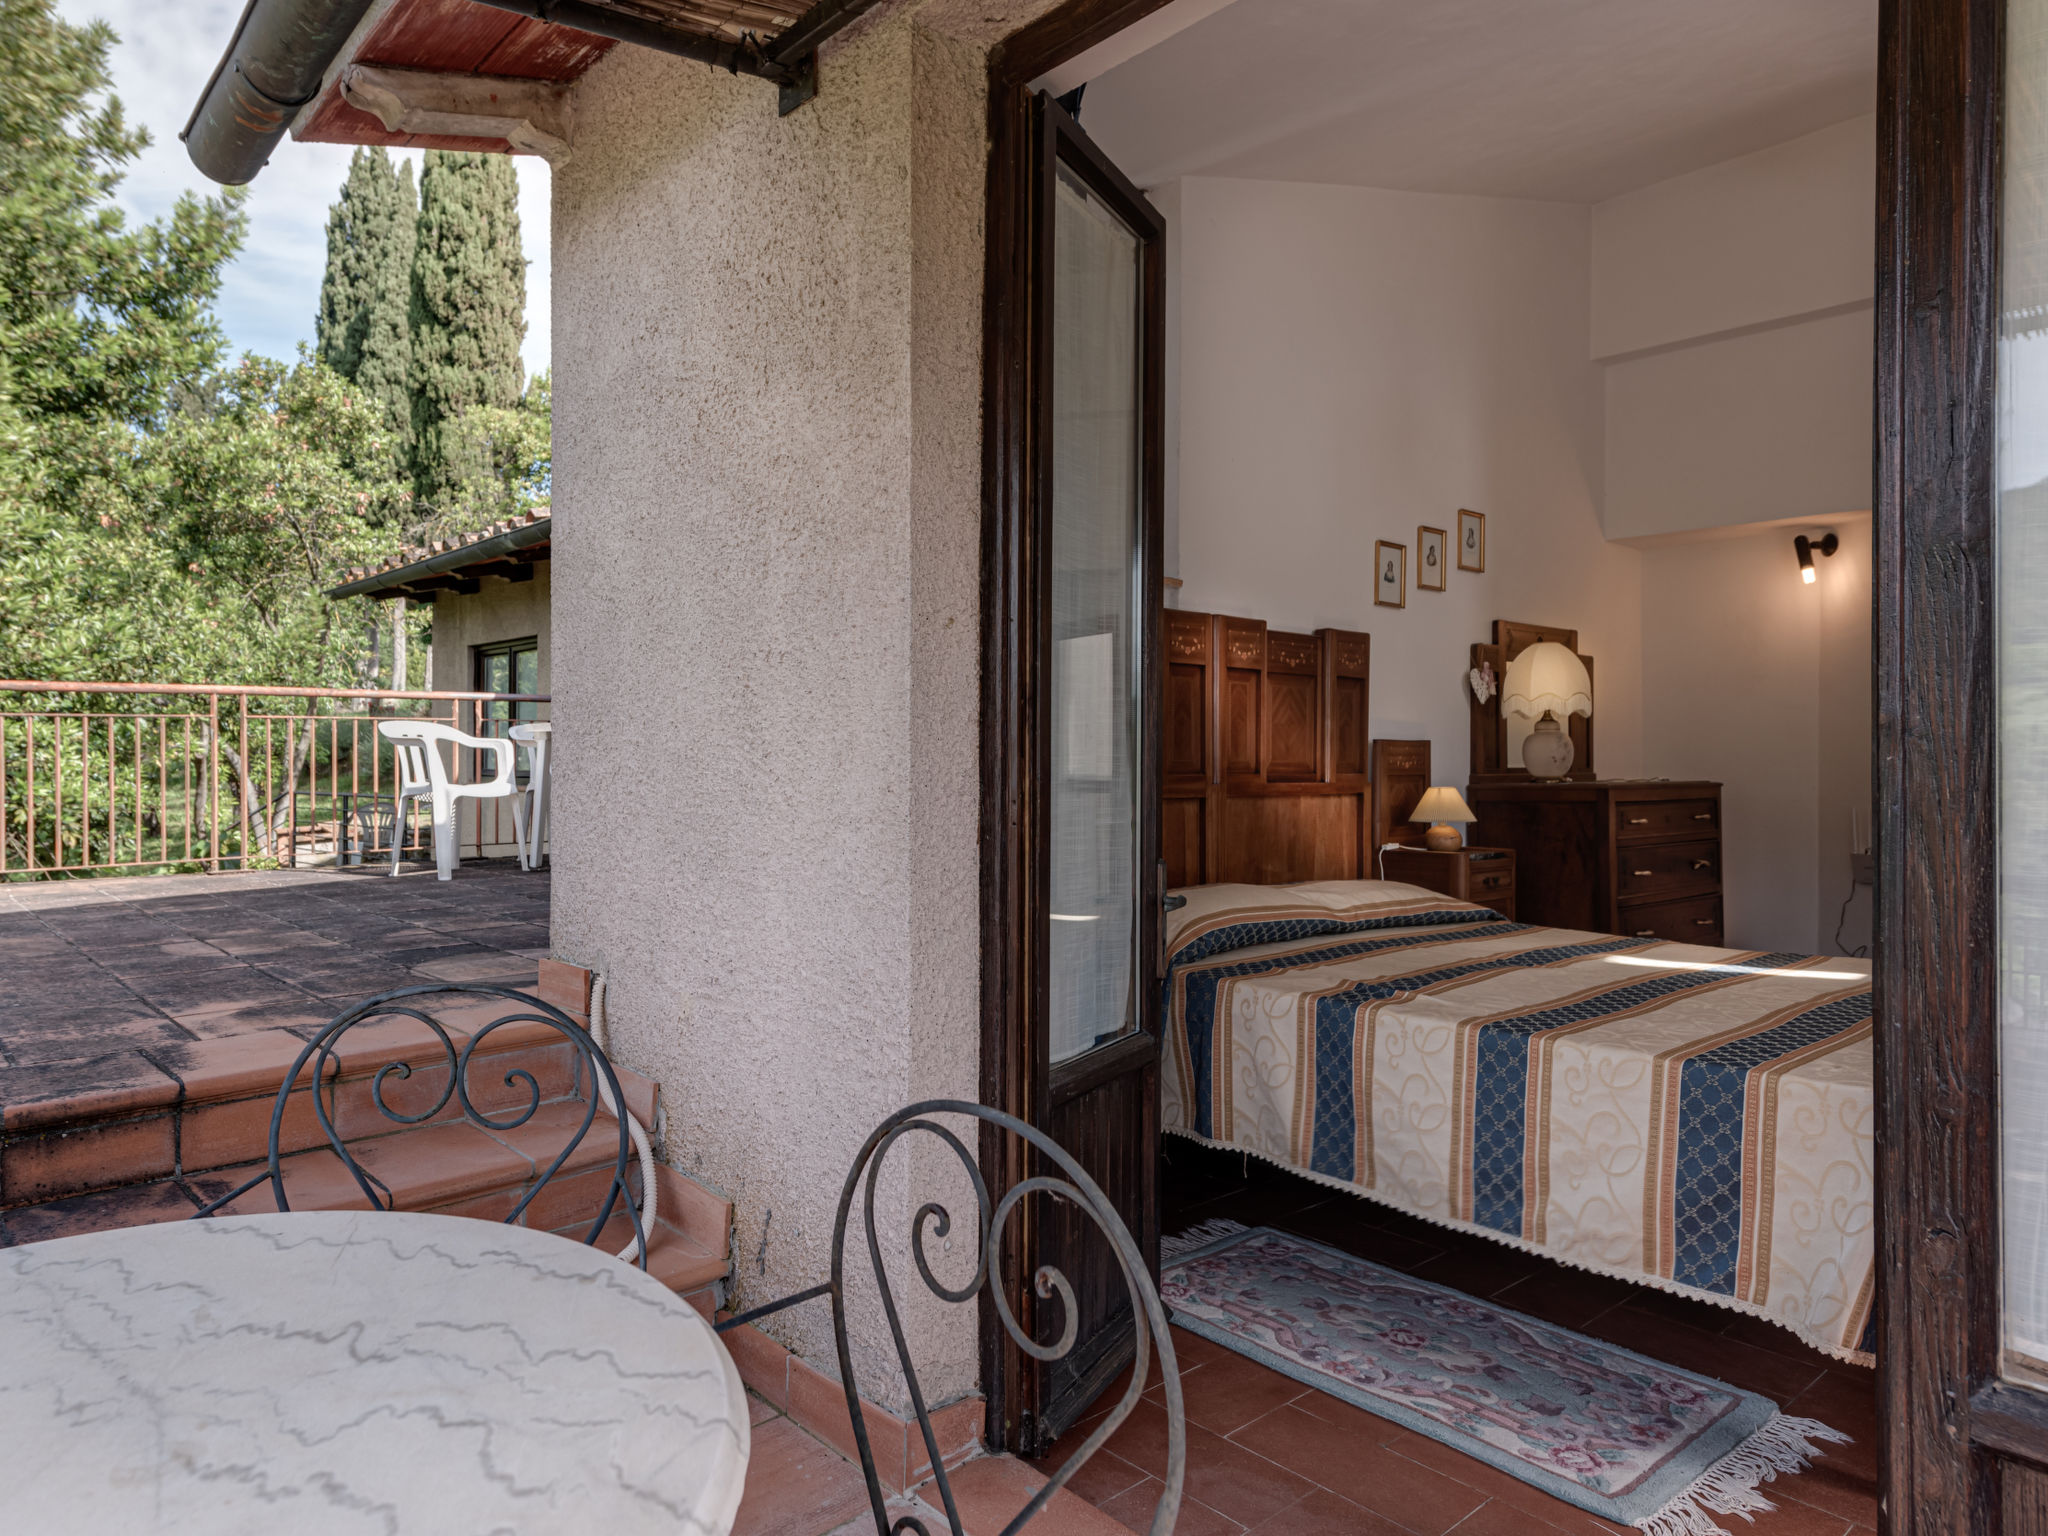 Foto 38 - Casa con 4 camere da letto a San Gimignano con piscina e giardino